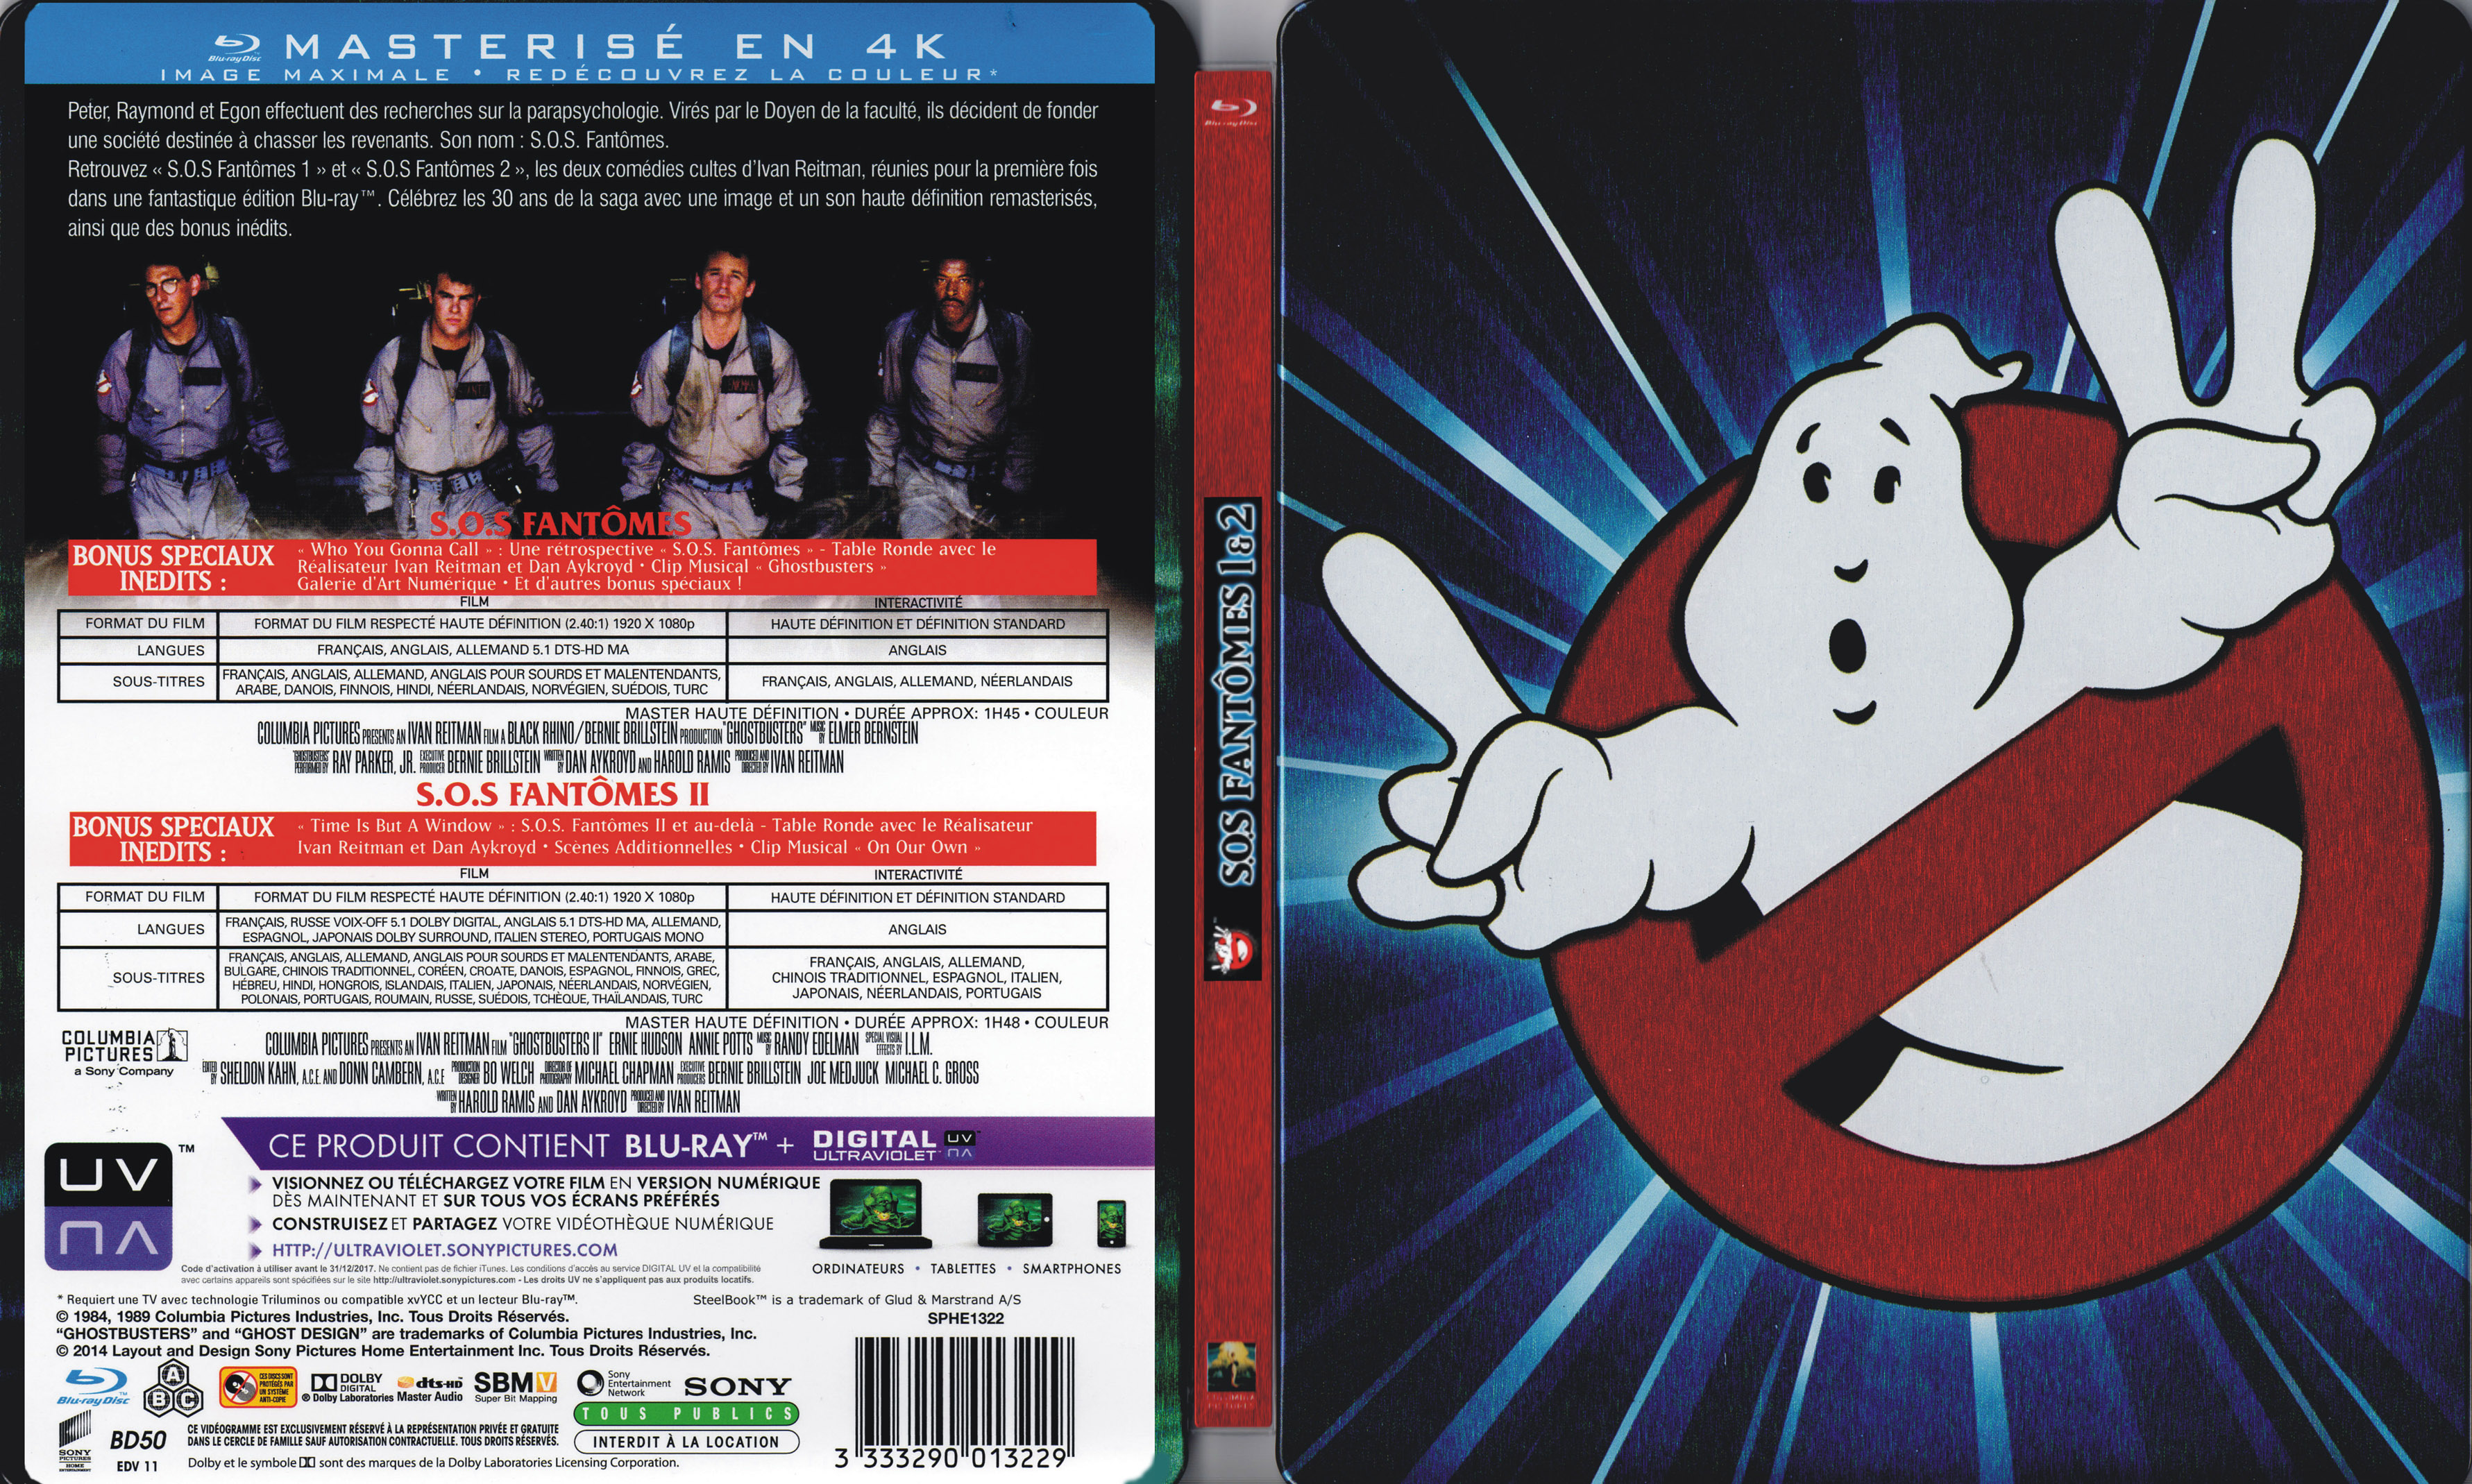 Jaquette DVD SOS fantomes 1 + 2  (BLU-RAY) v2